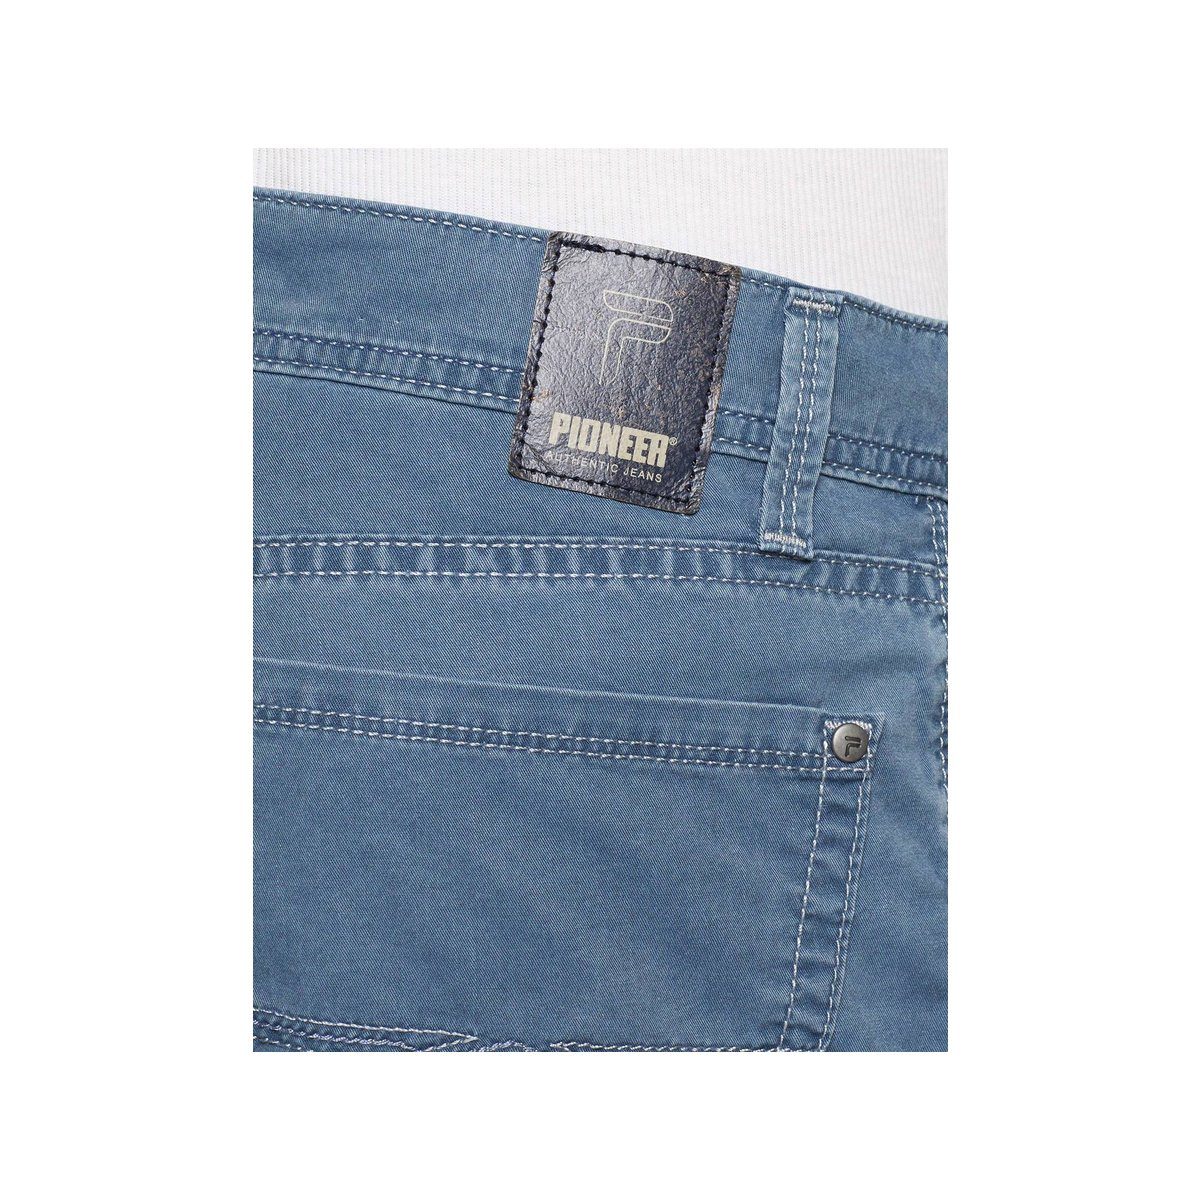 Pioneer Authentic Jeans Cargoshorts blau regular (1-tlg., keine Angabe)